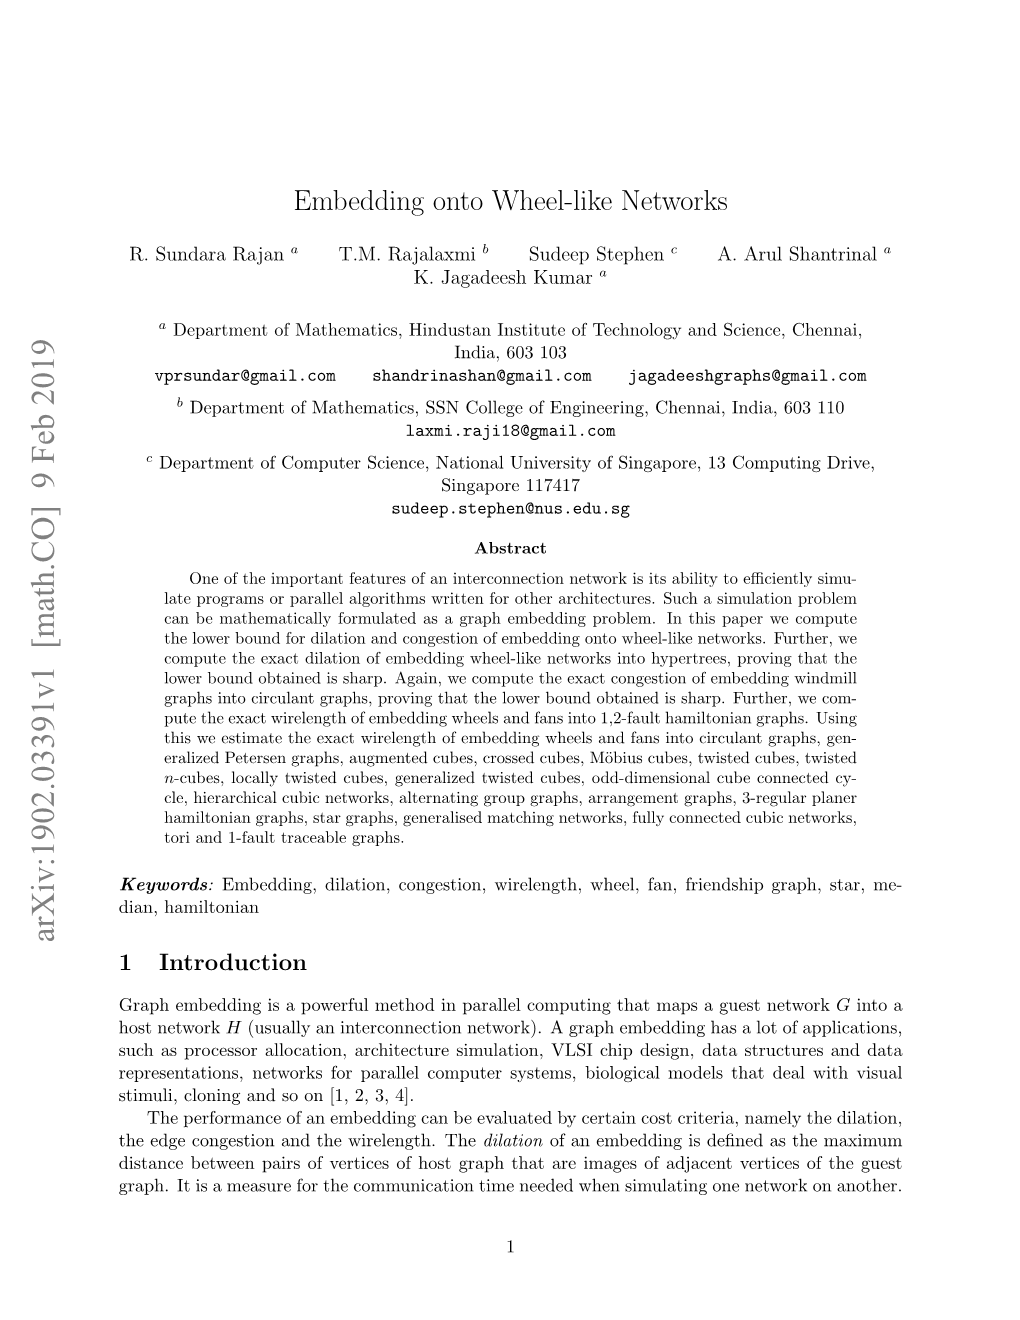 Embedding Onto Wheel-Like Networks